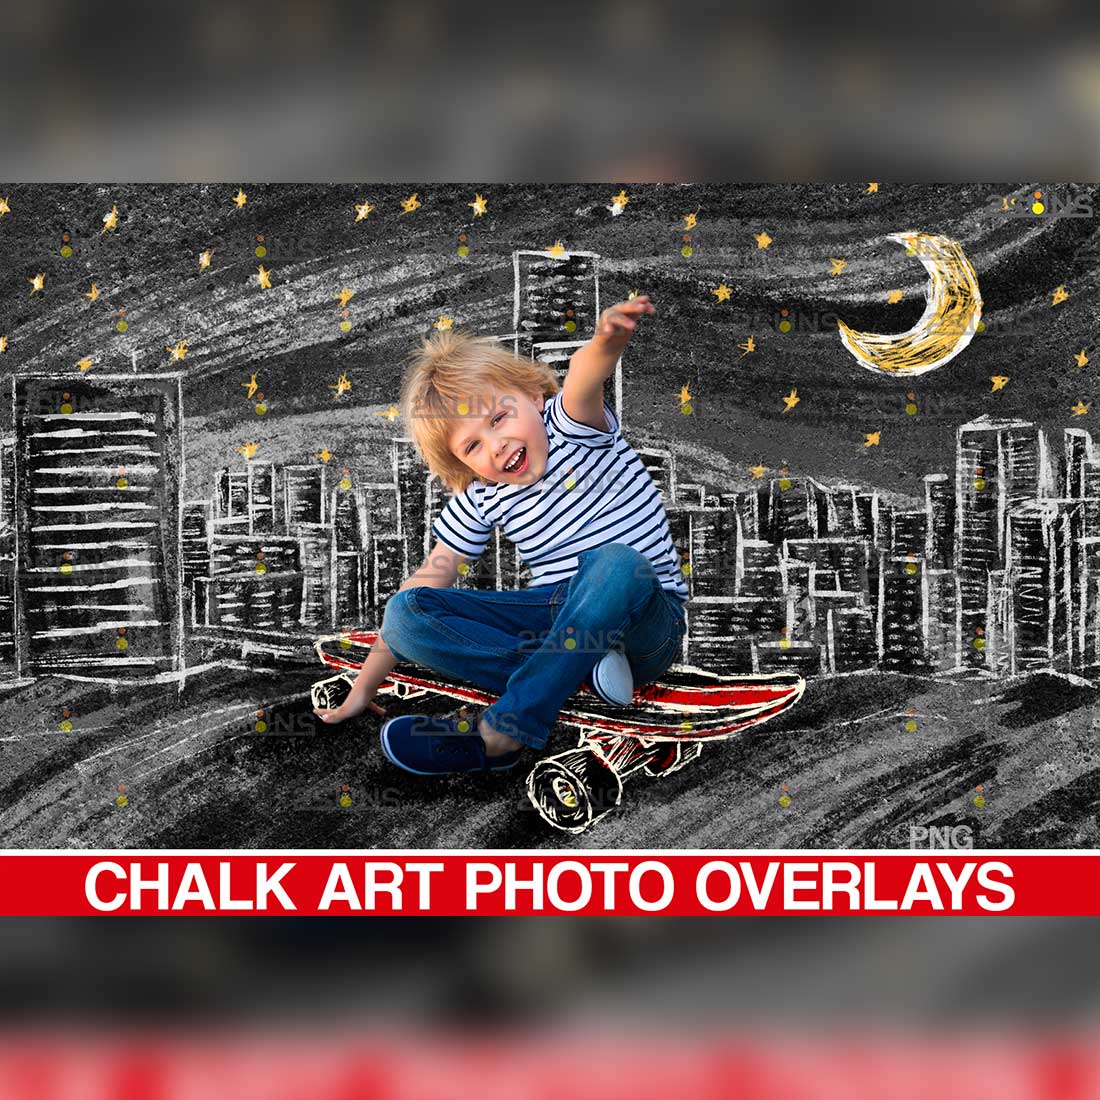 Skate And Sidewalk Chalk Art Photo Overlays cover image.